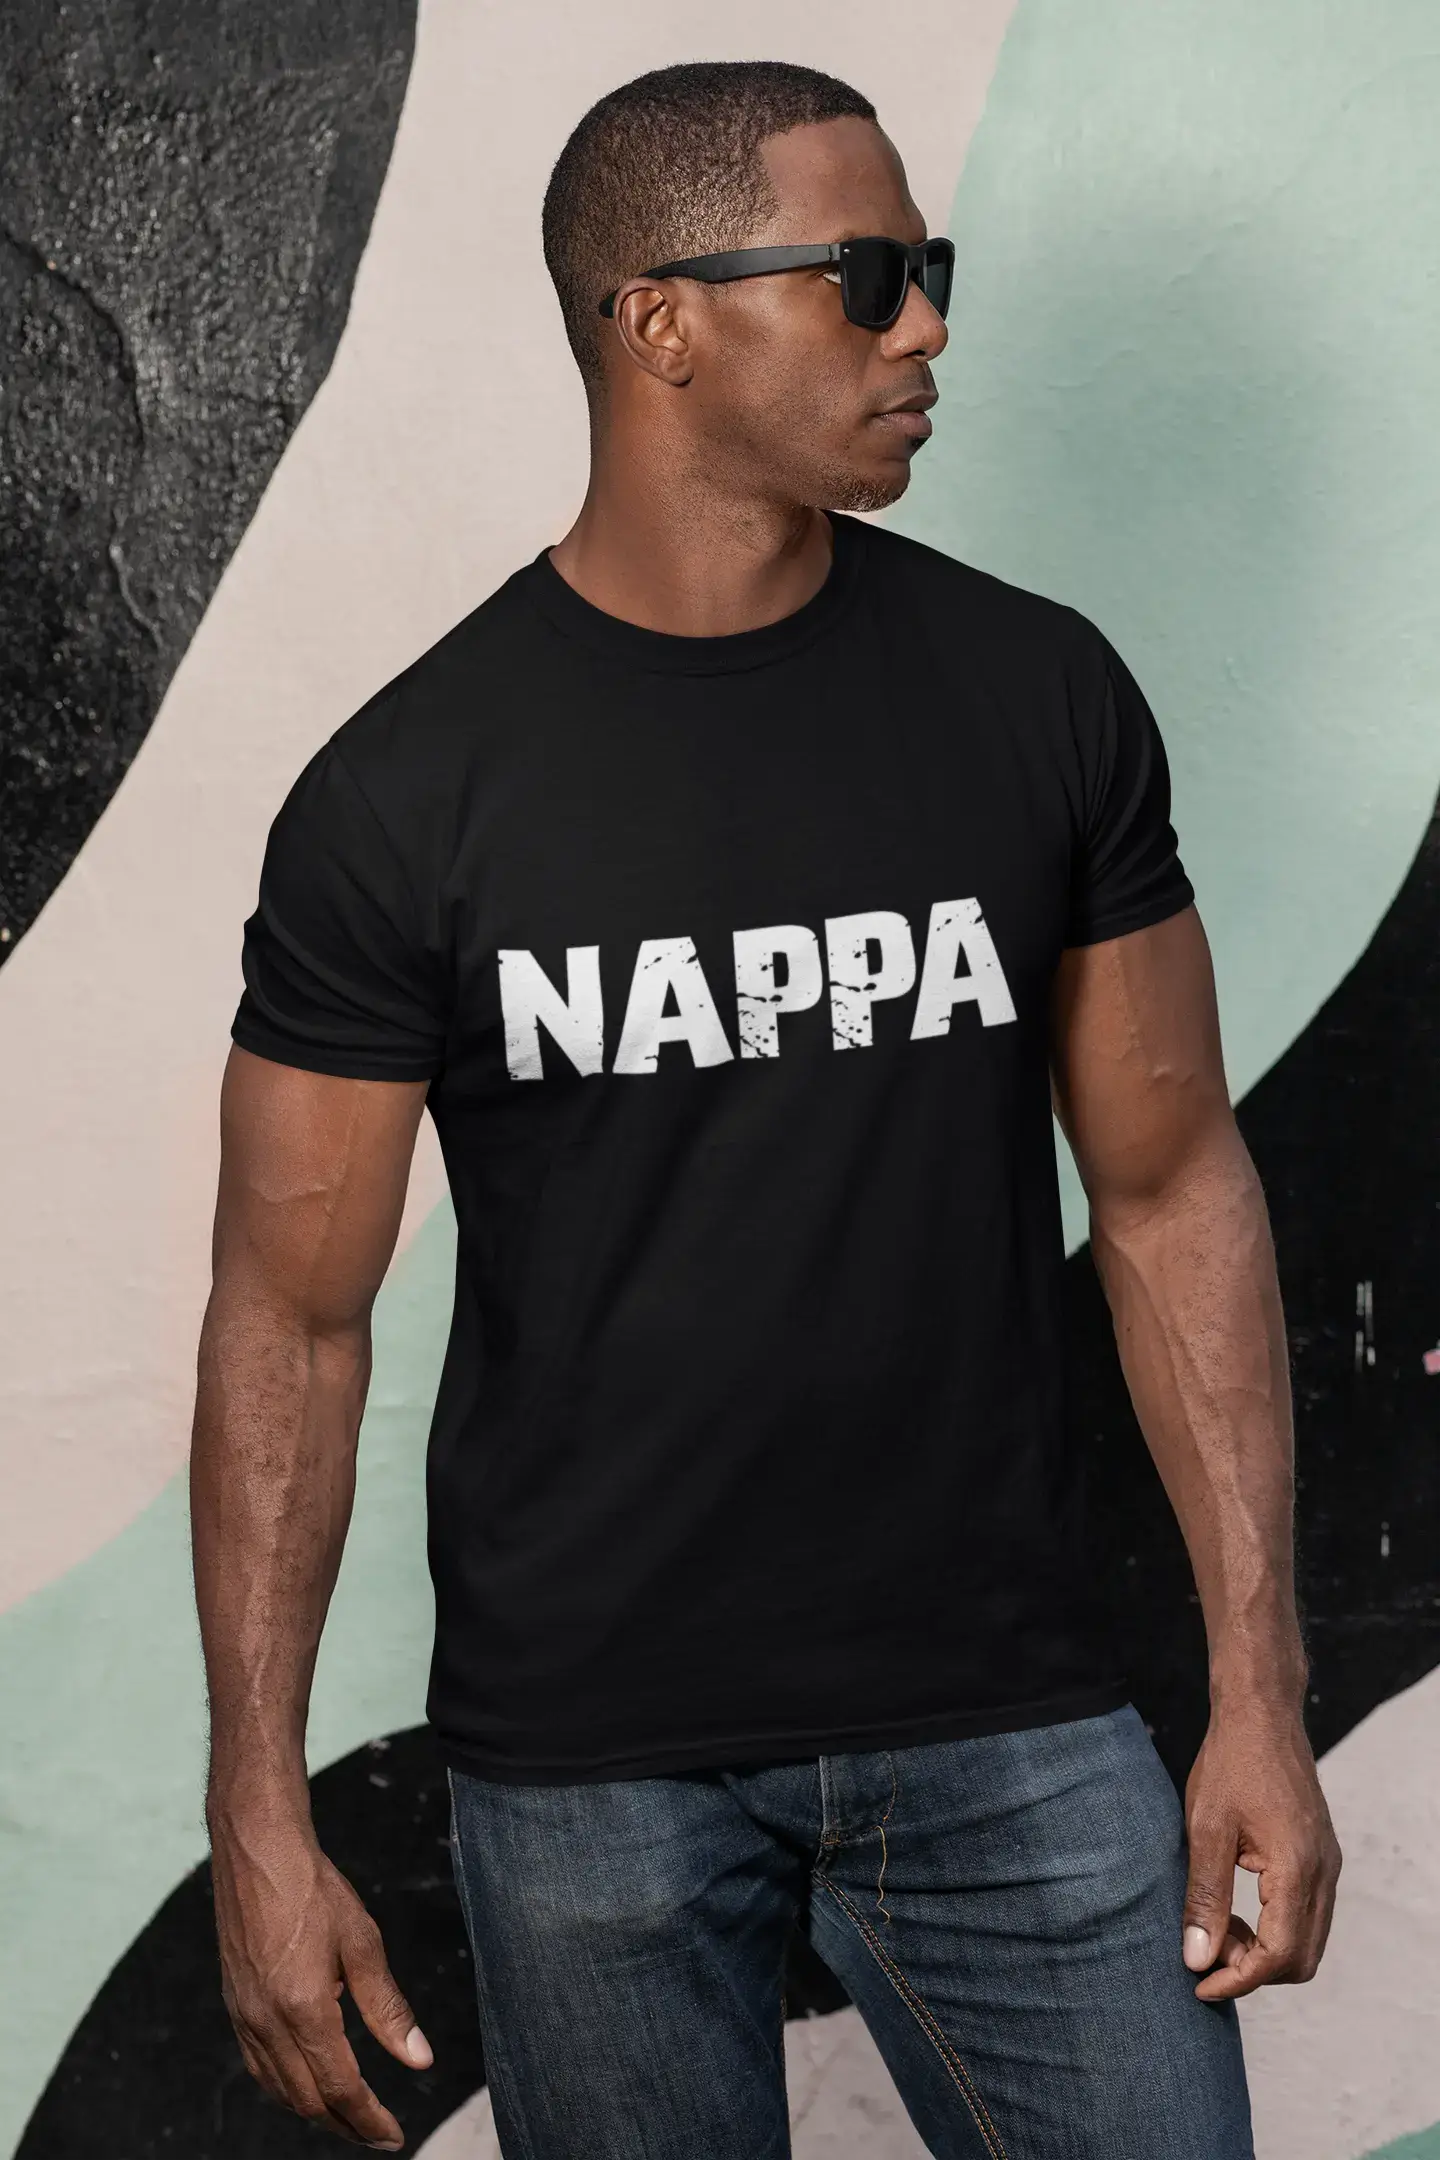 nappa Men's Retro T shirt Black Birthday Gift 00553